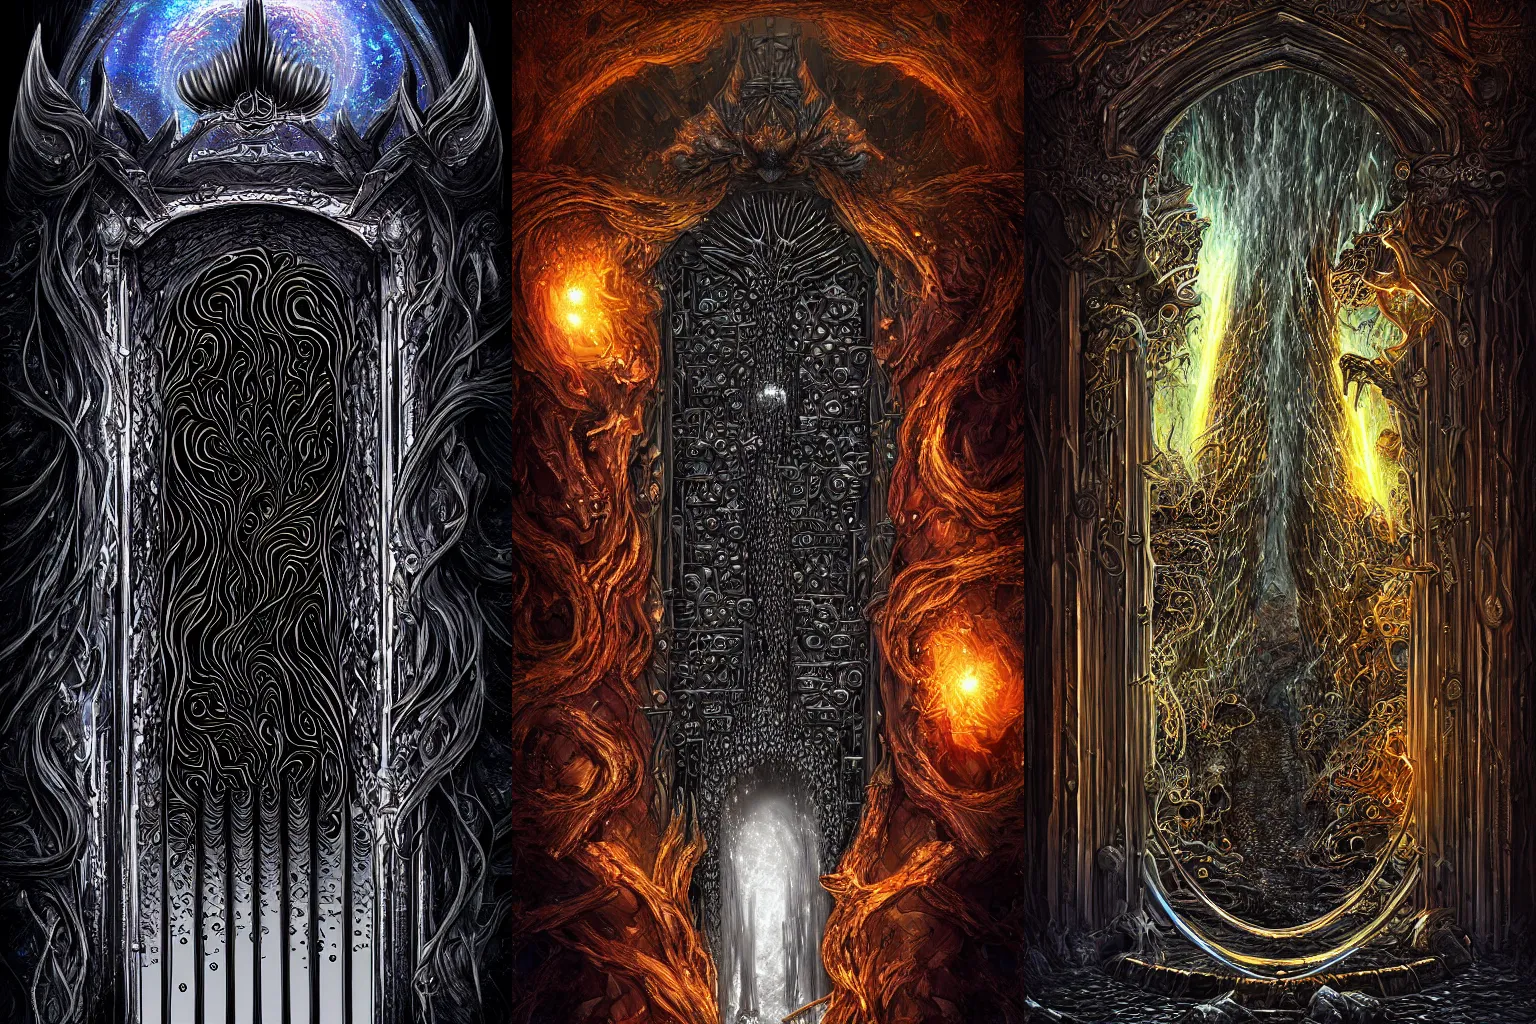 Prompt: the gate to the eternal kingdom of ferrofluid, fantasy, digital art, hd, detailed.